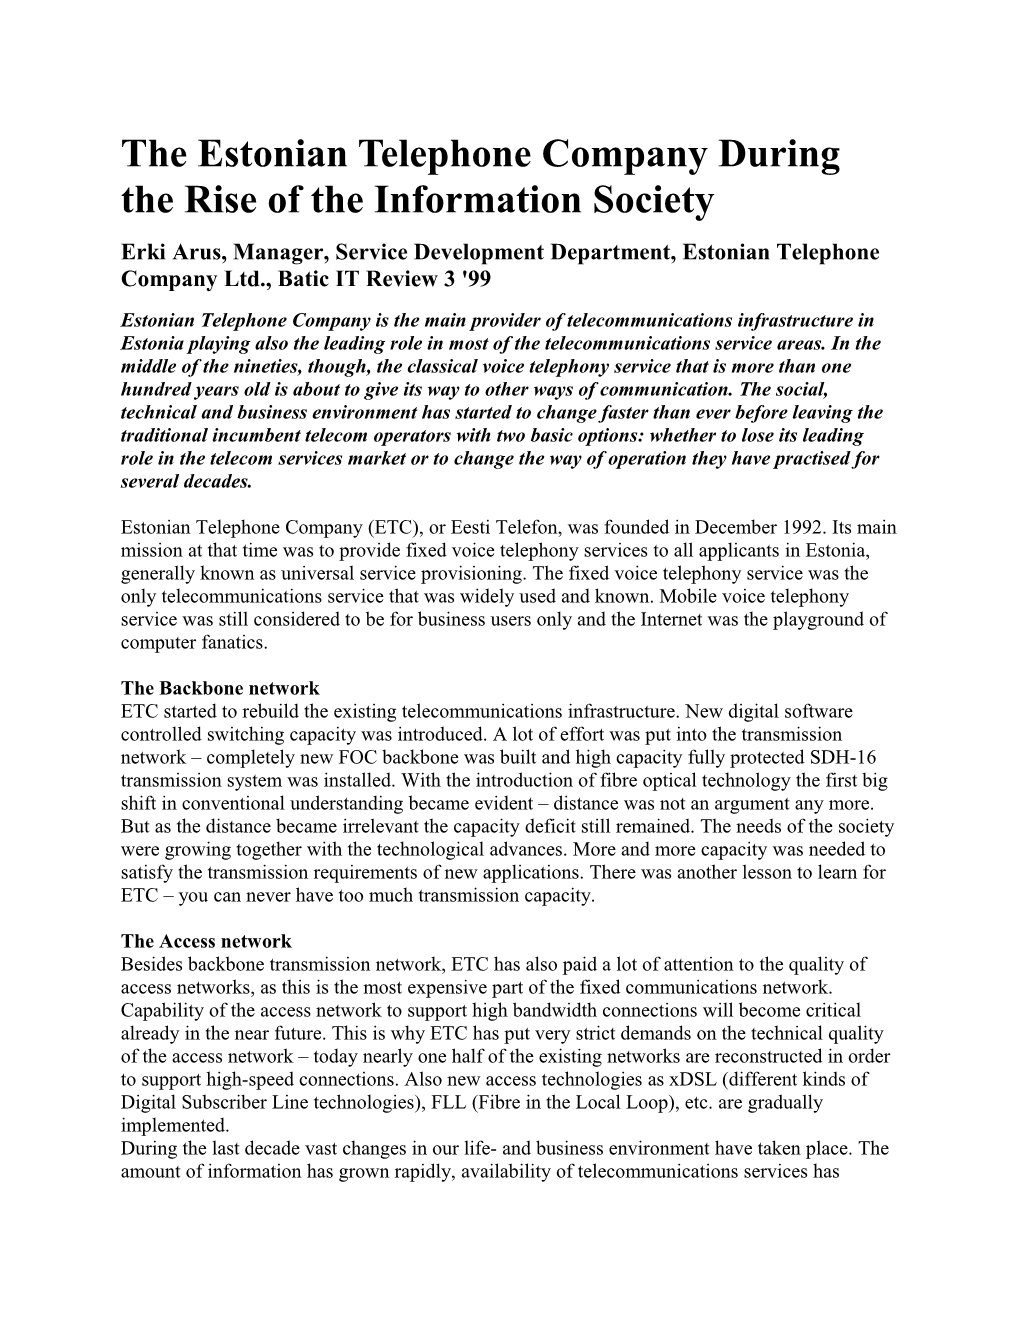 Estonian Telephone Company at the Rise of Information Society